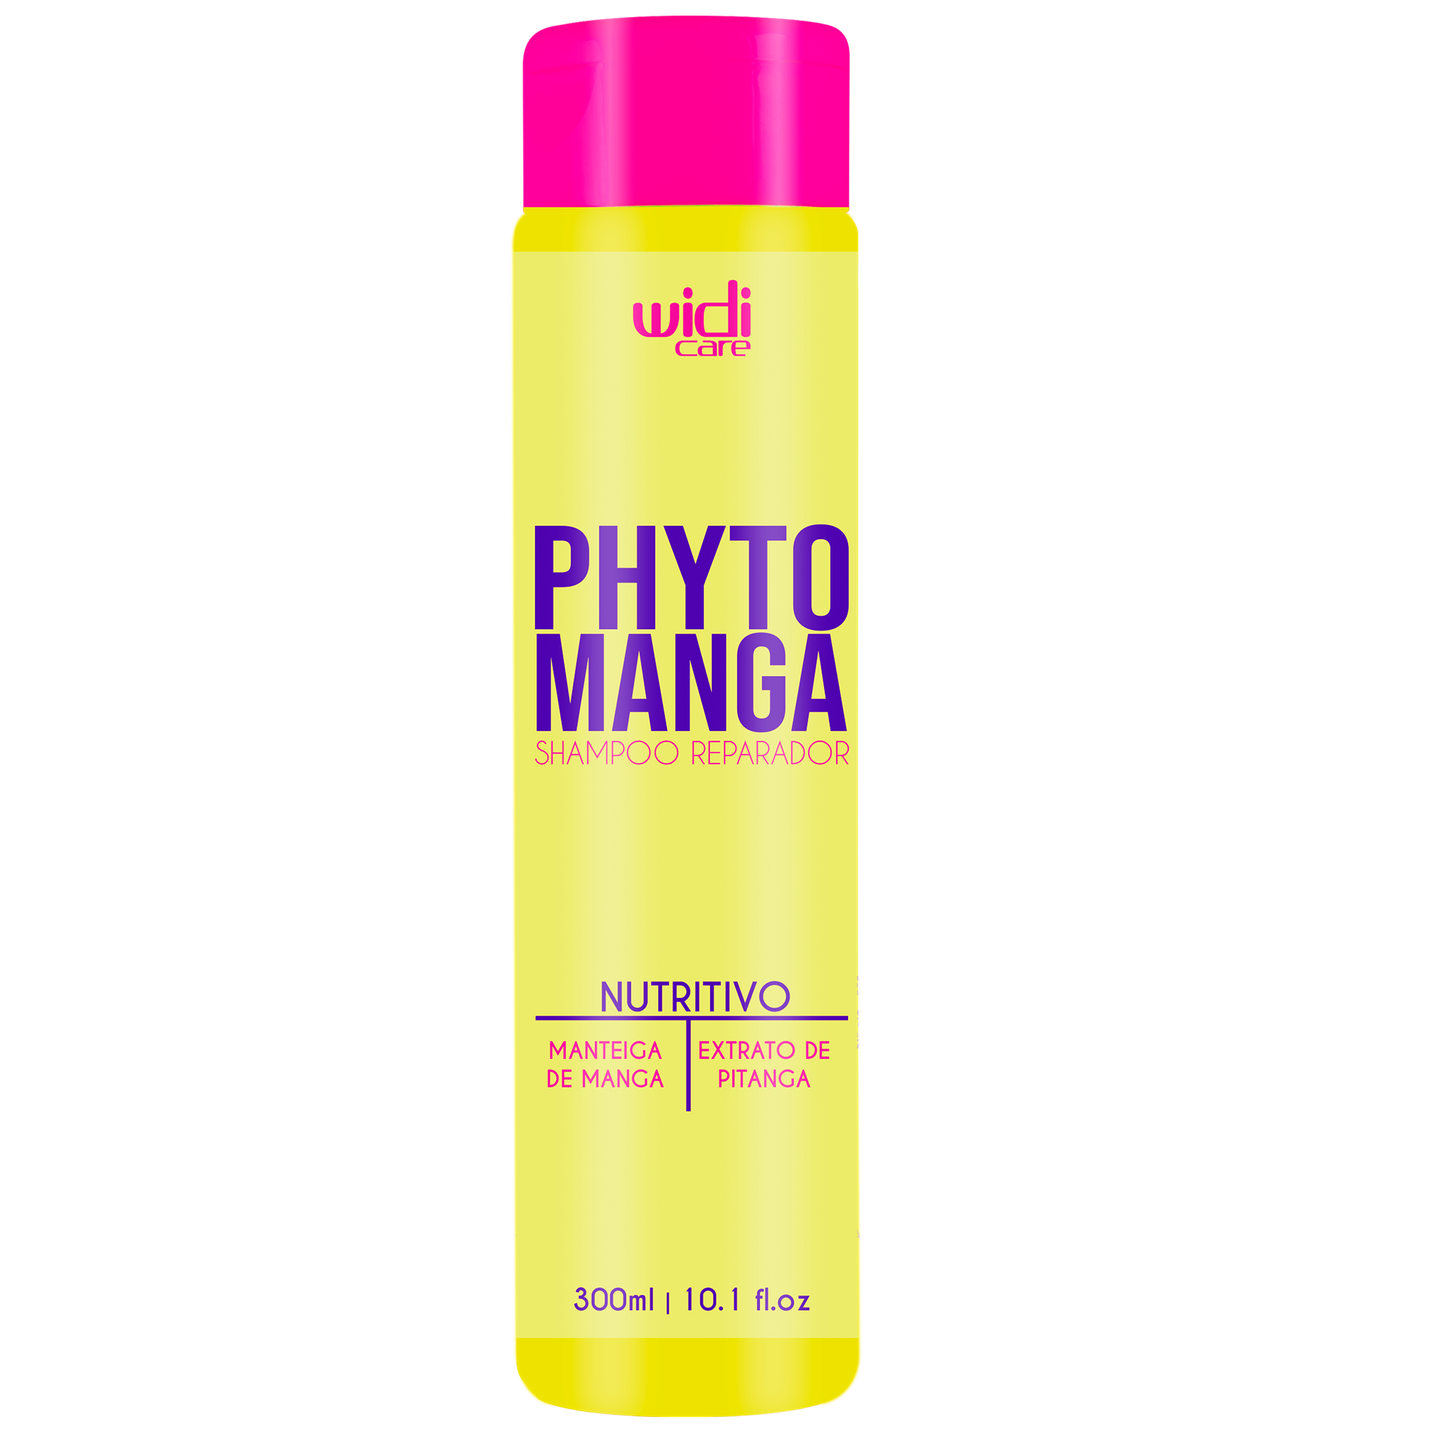 Widi Care PhytoManga Shampoo Reparador 300ml